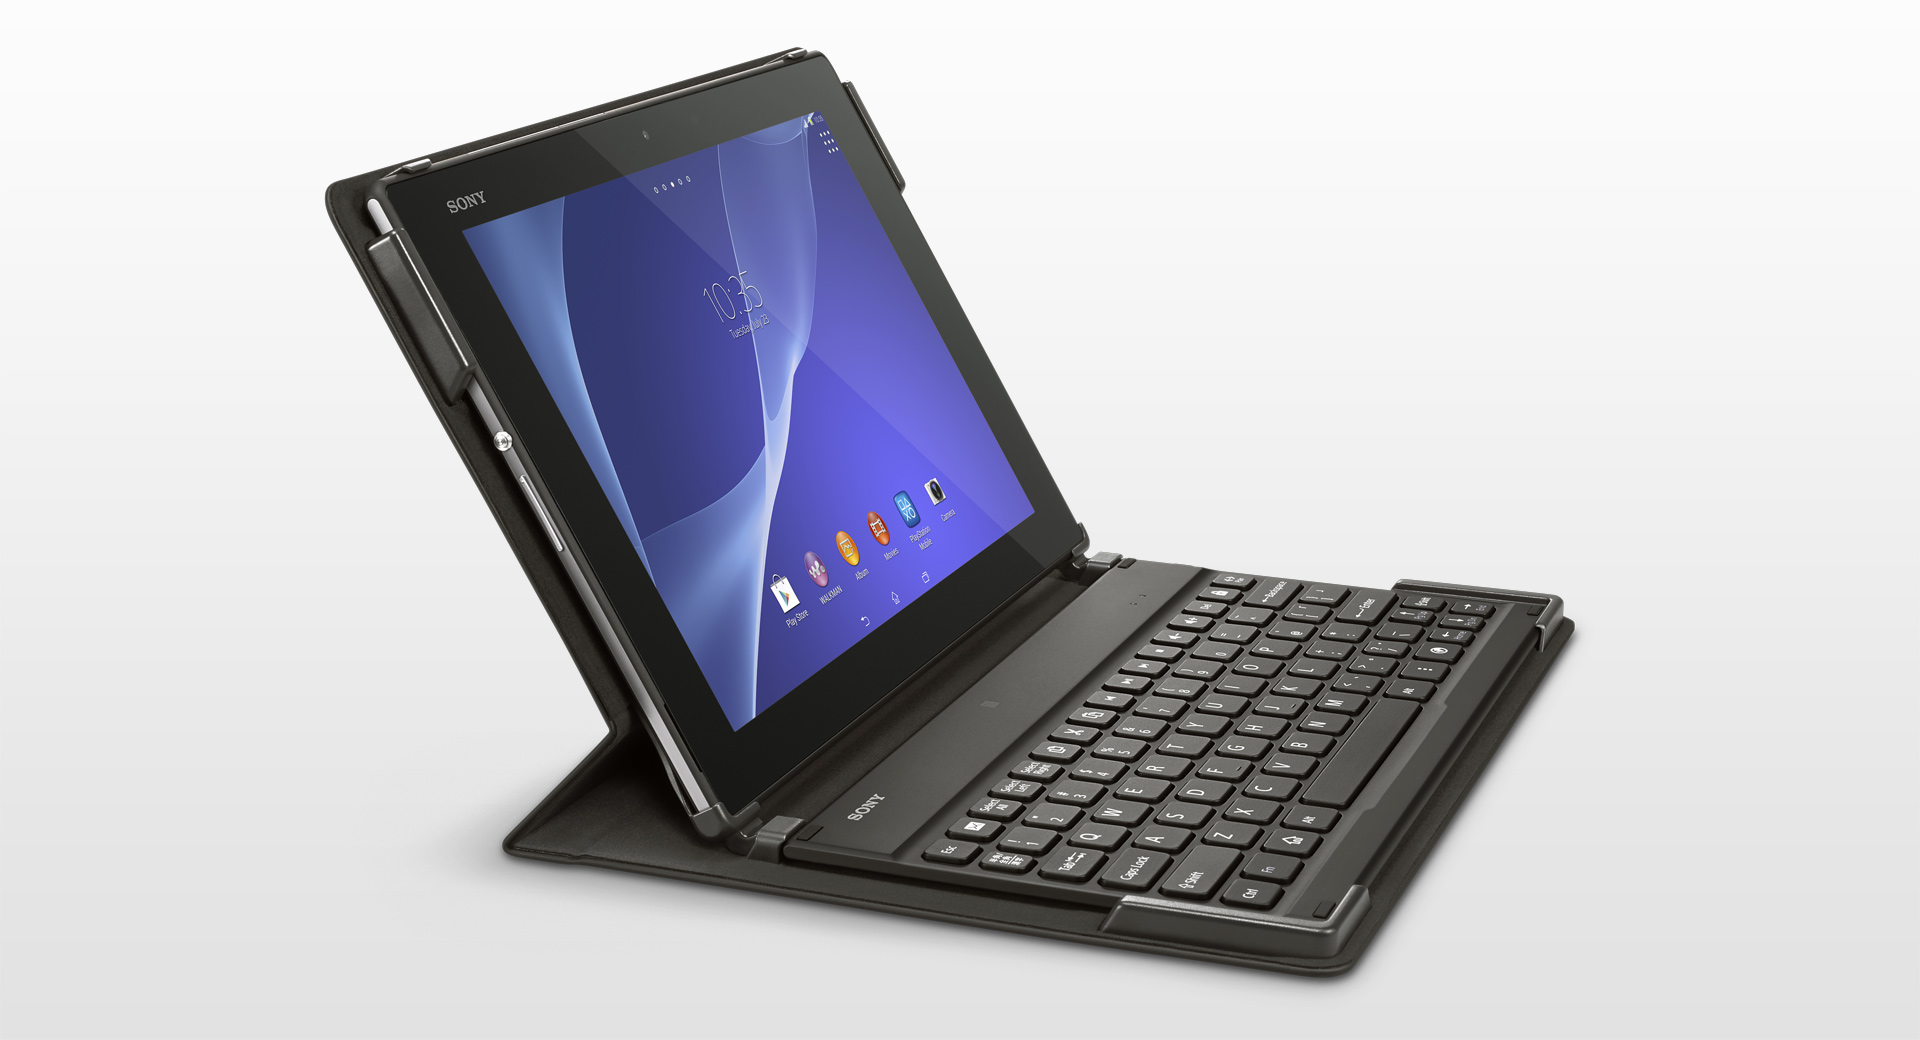 xperia Z2 tablet + bluetooth keyboard